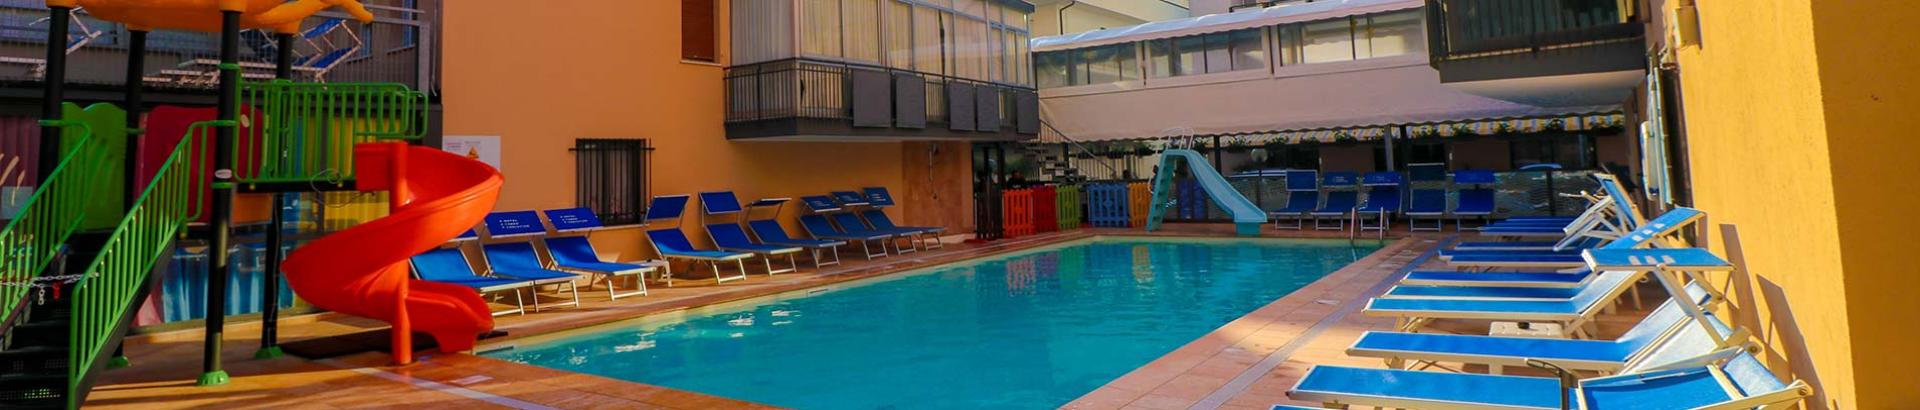 hotelchristianrimini en with-pool 012